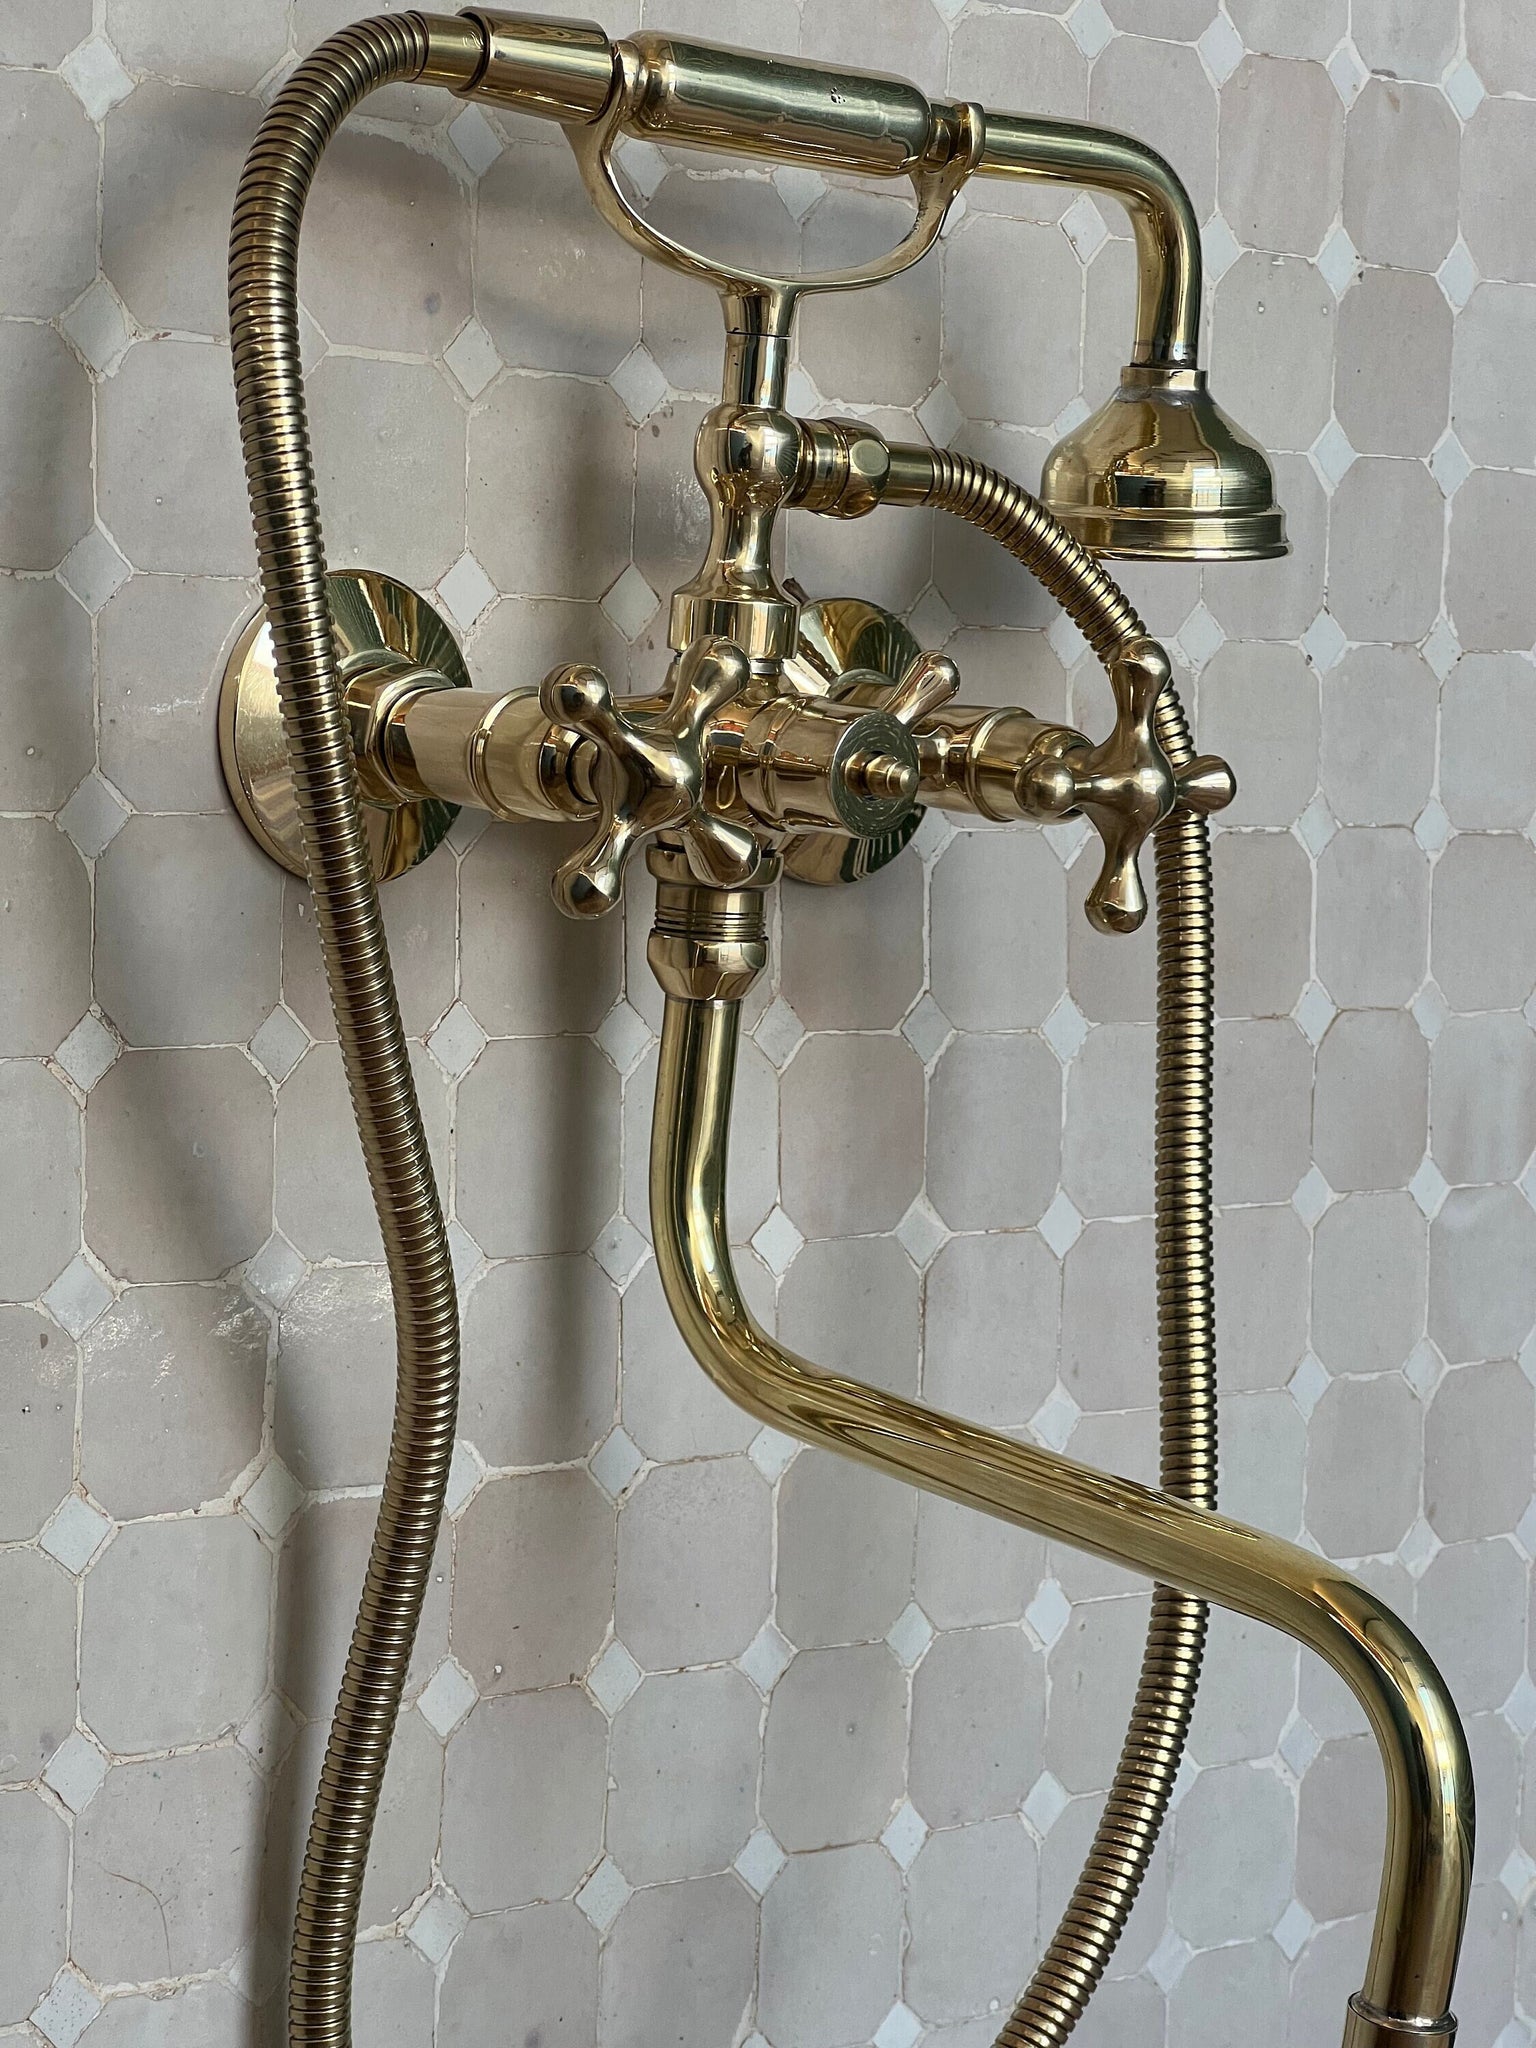 Unlacquered Brass Bathtub Faucet, Vintage Tub Filler for bathroom with sprayer